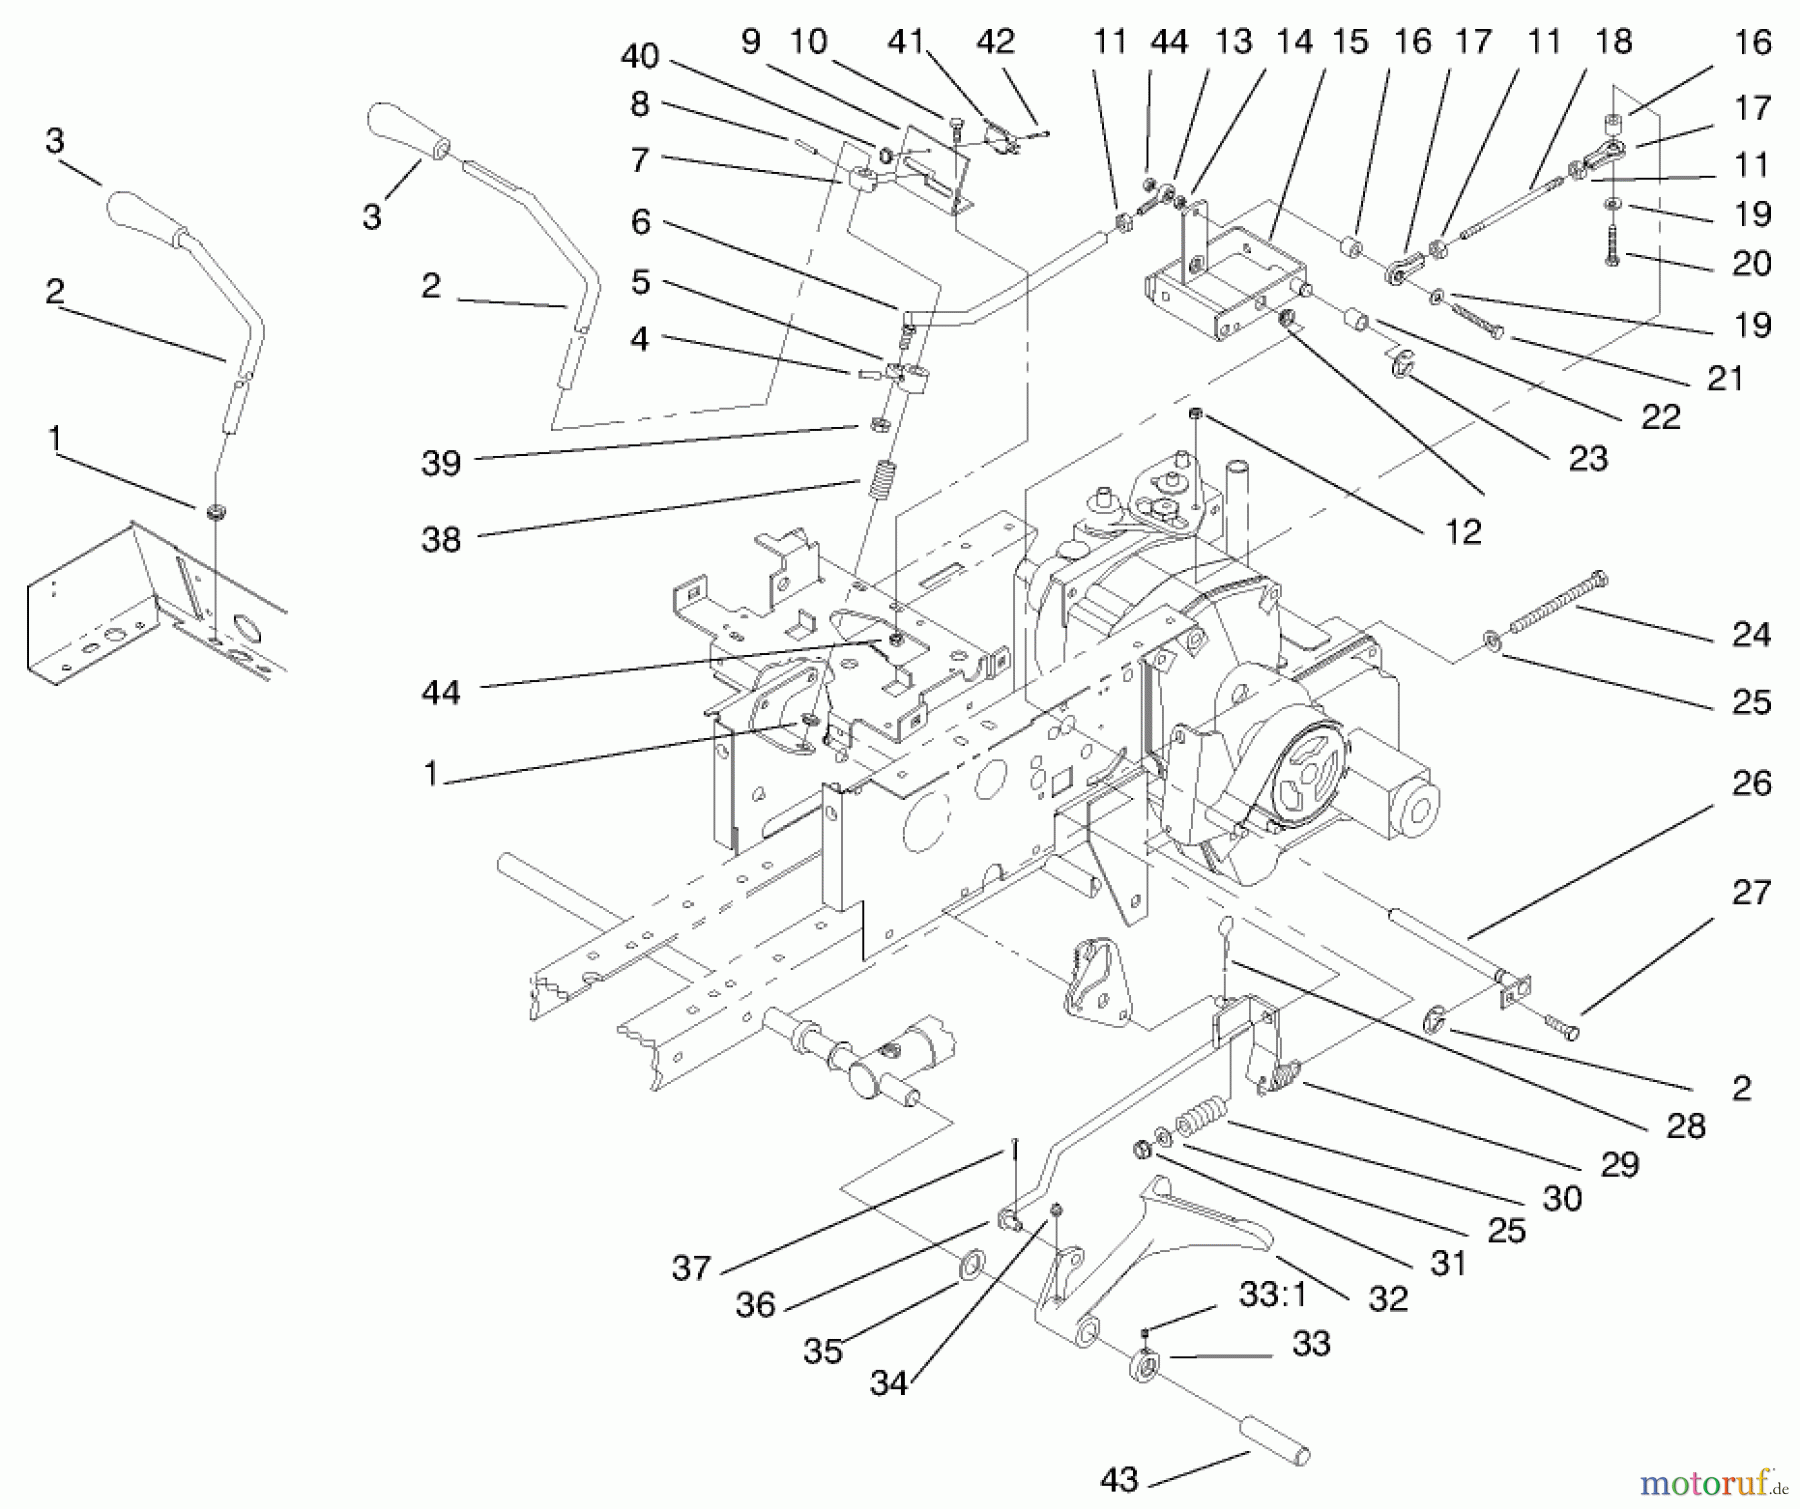  Toro Neu Mowers, Lawn & Garden Tractor Seite 1 73502 (520-H) - Toro 520-H Garden Tractor, 1997 (7900001-7999999) HYDRO CONTROLS, BRAKE SYSTEM